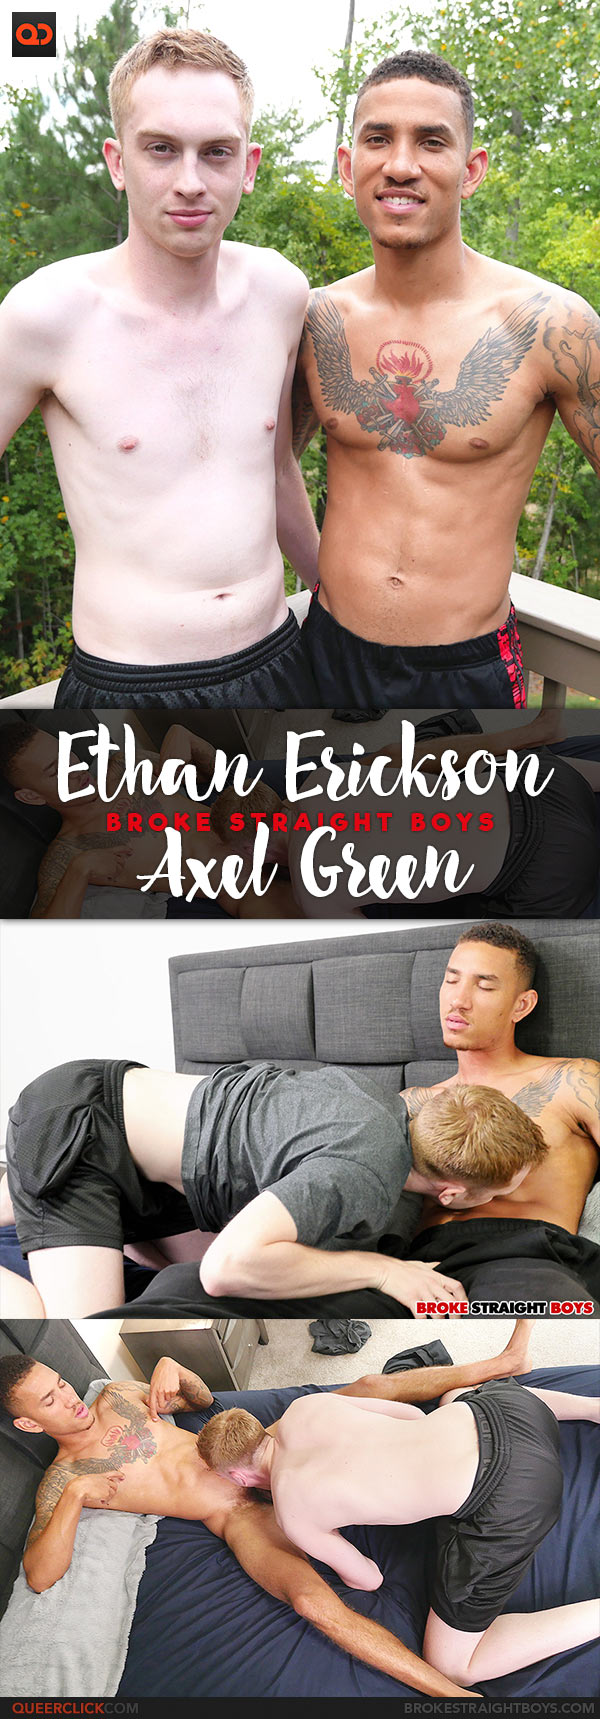 Broke Straight Boys: Axel Green Fucks Ethan Erickson - Bareback